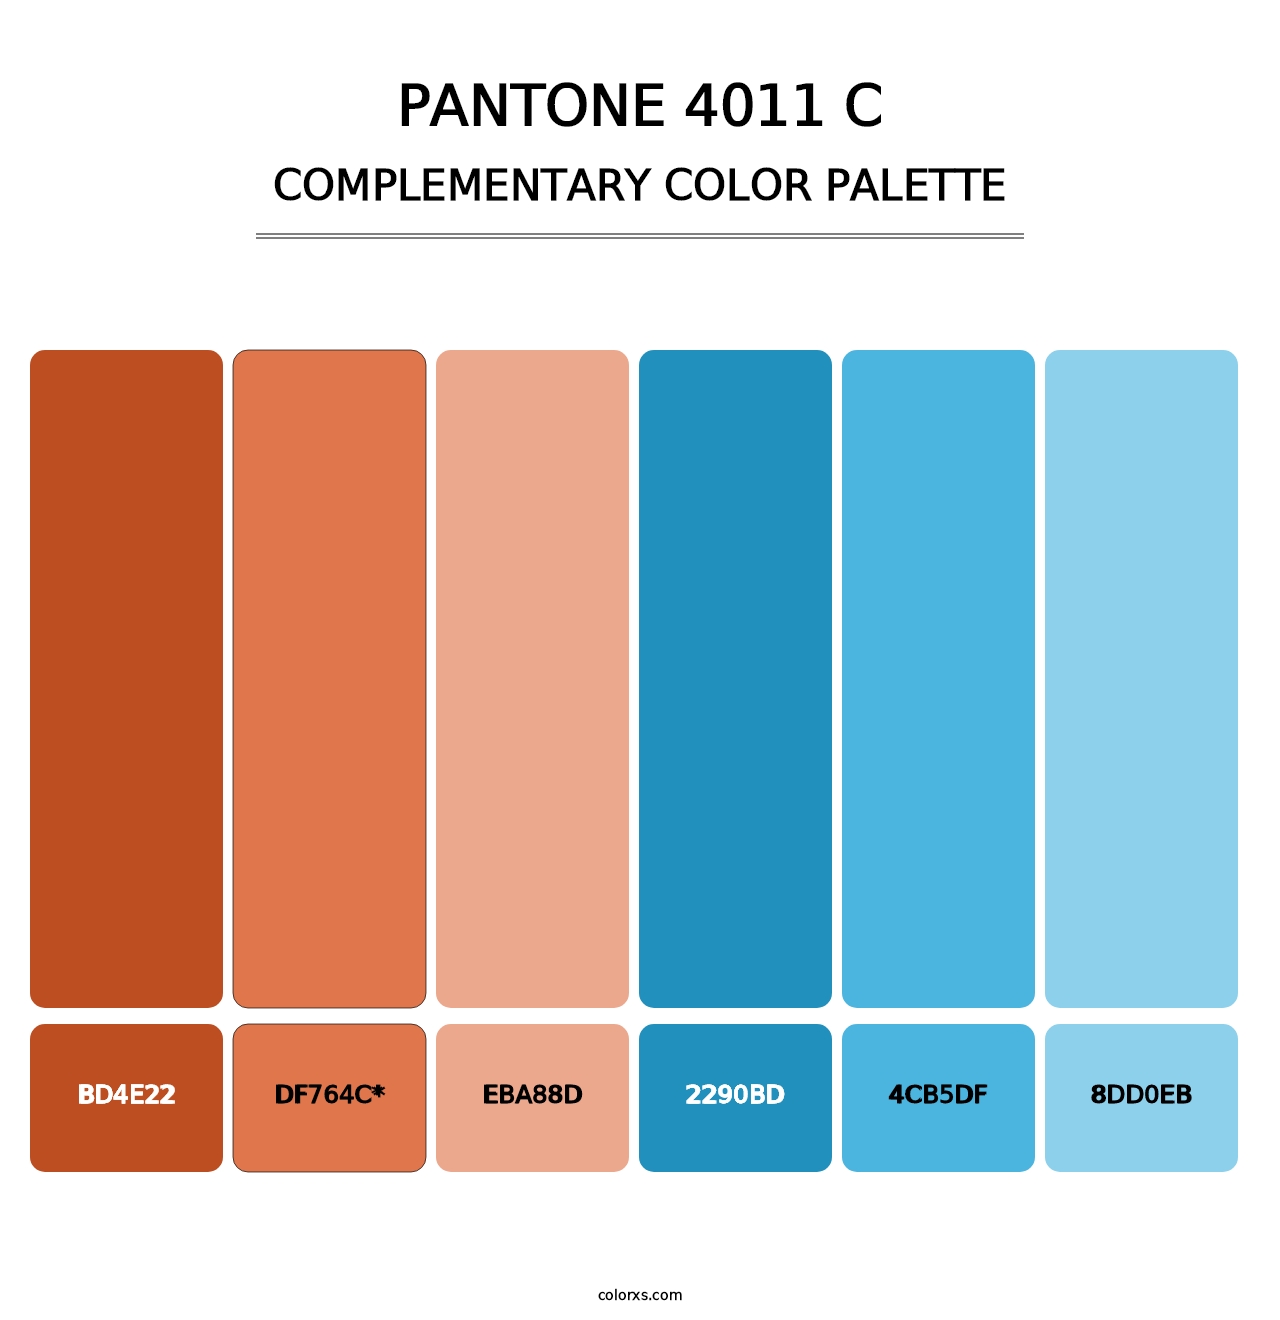 PANTONE 4011 C - Complementary Color Palette